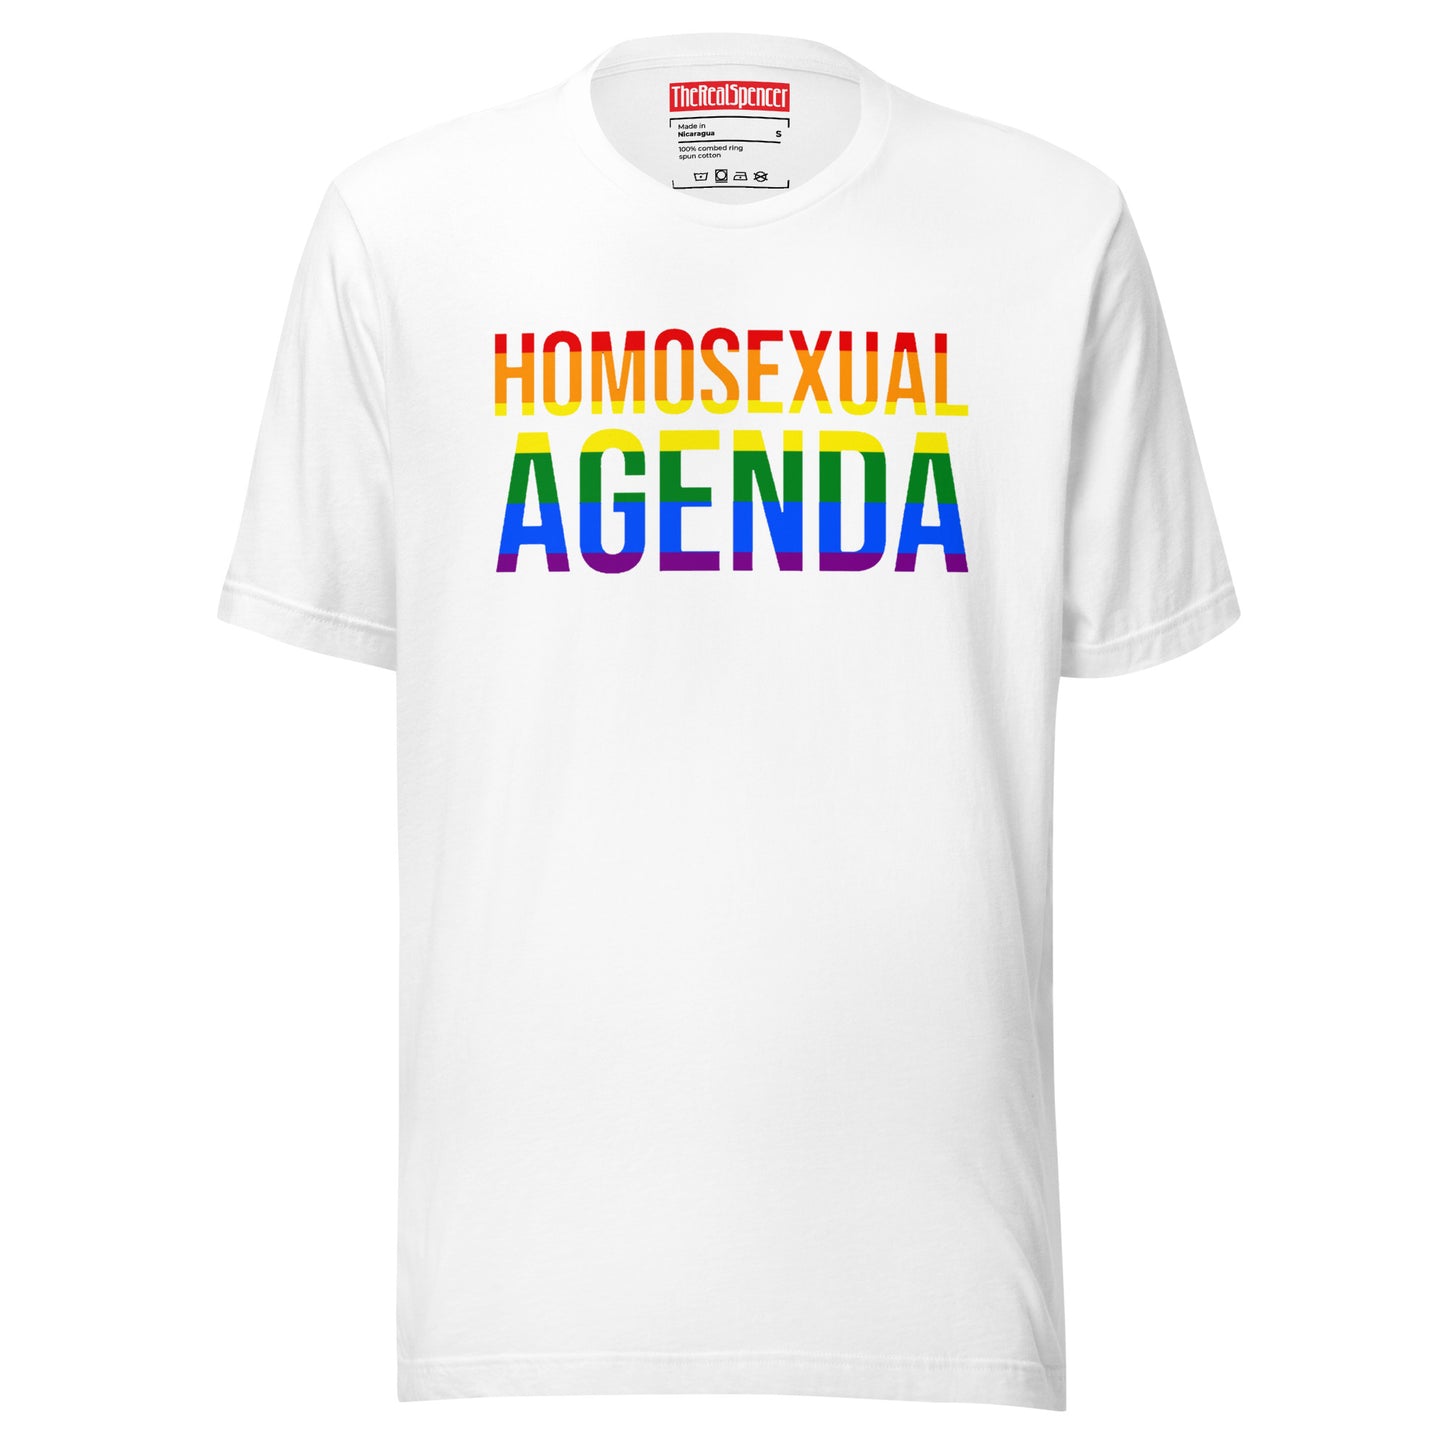 Homosexual Agenda T-Shirt